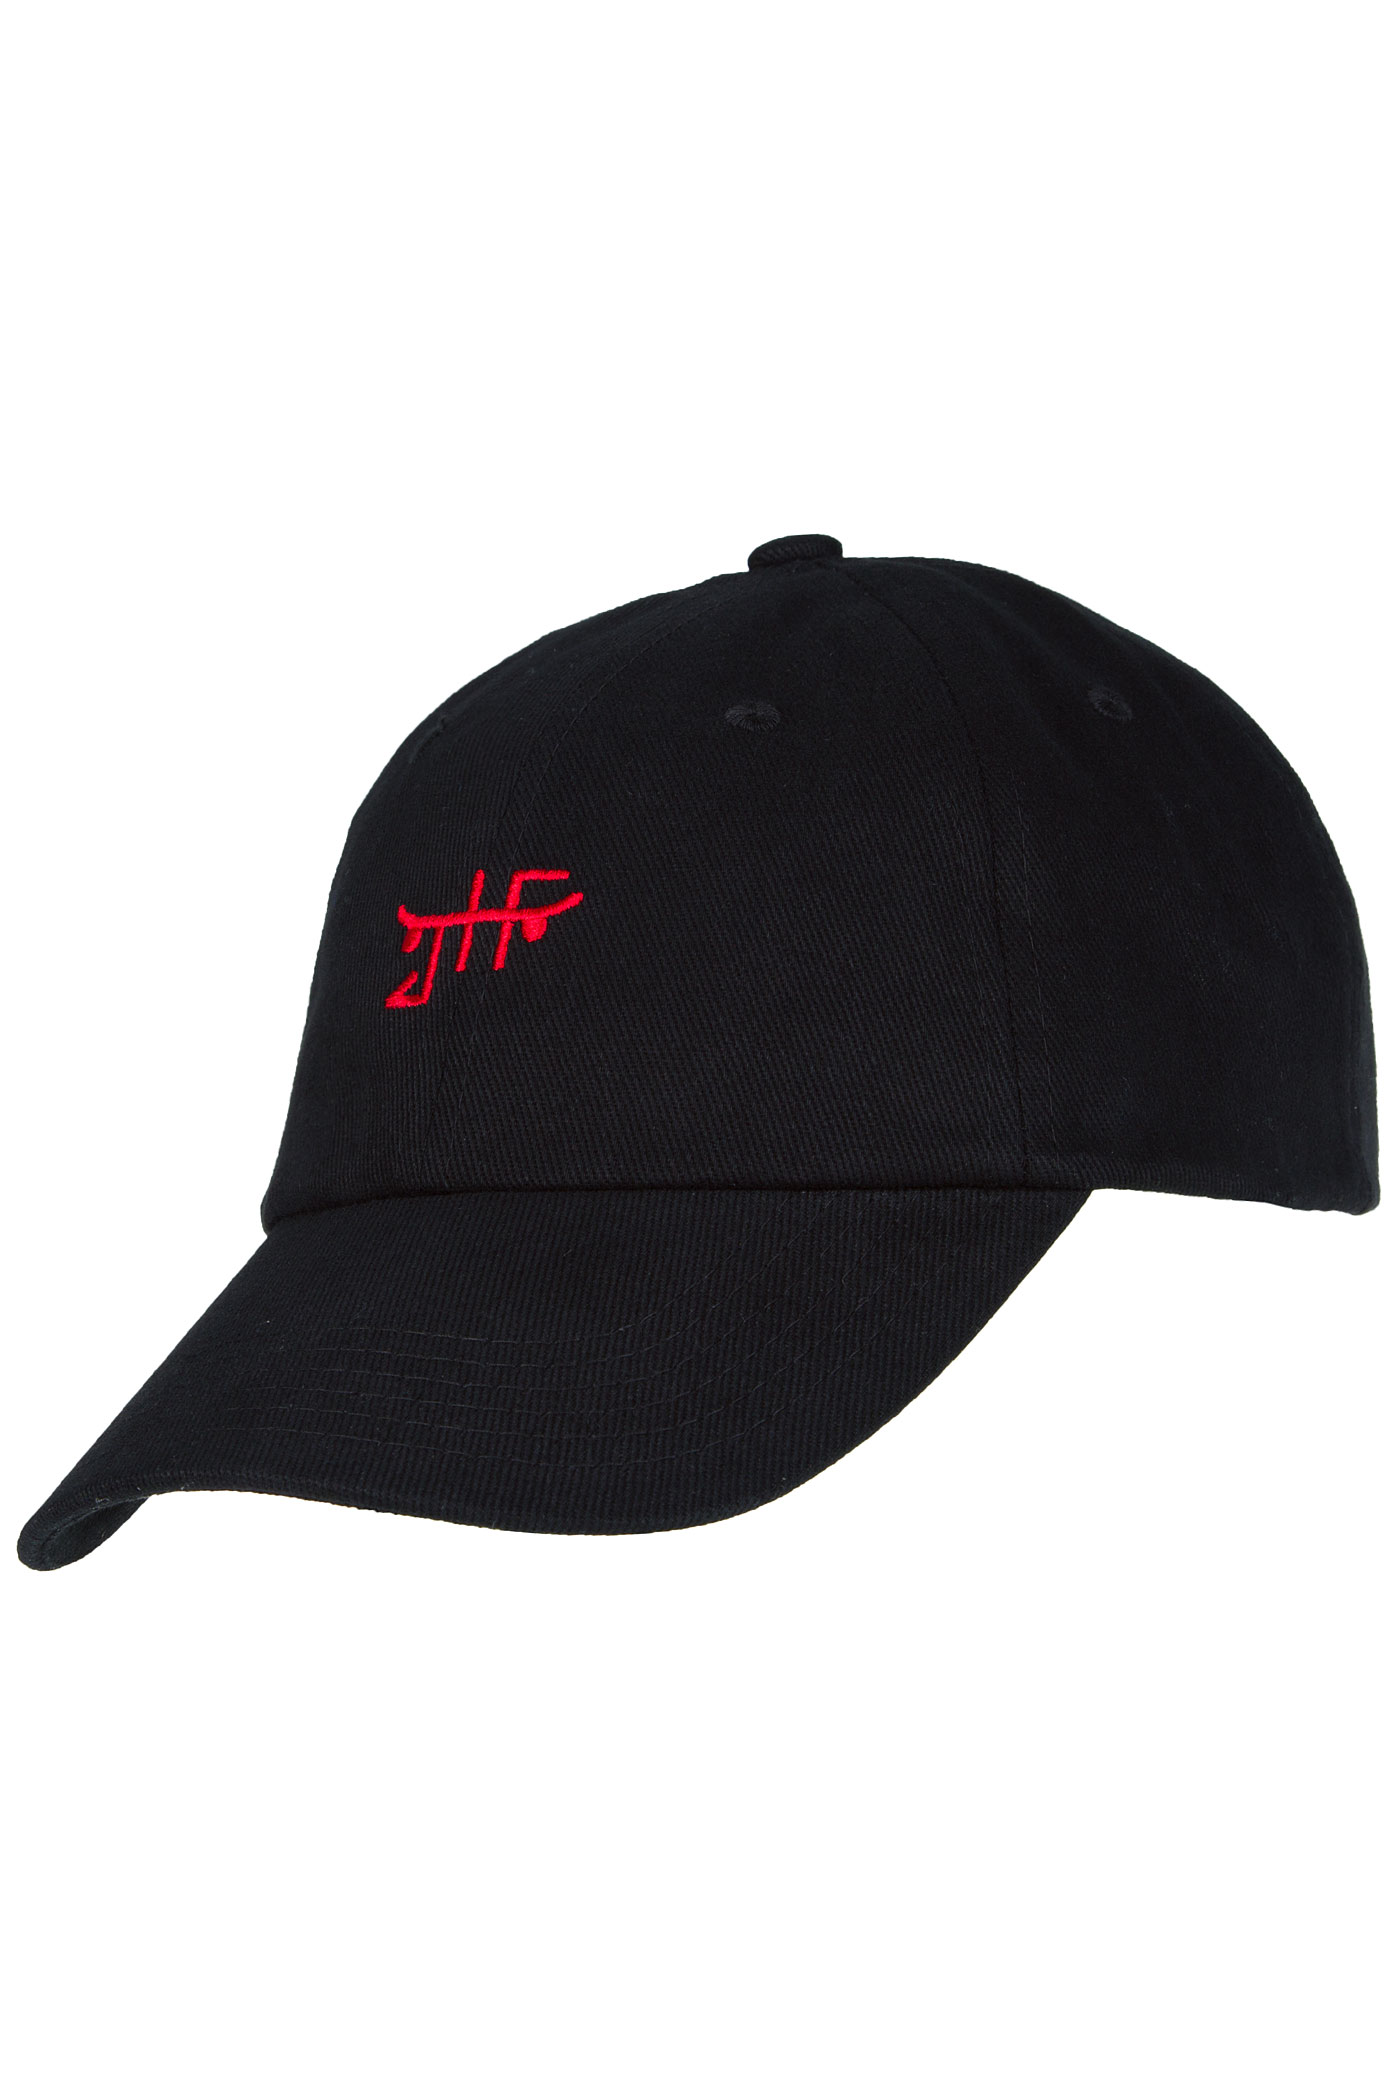 JHF Classic Skate Dad Cap (black red) buy at skatedeluxe